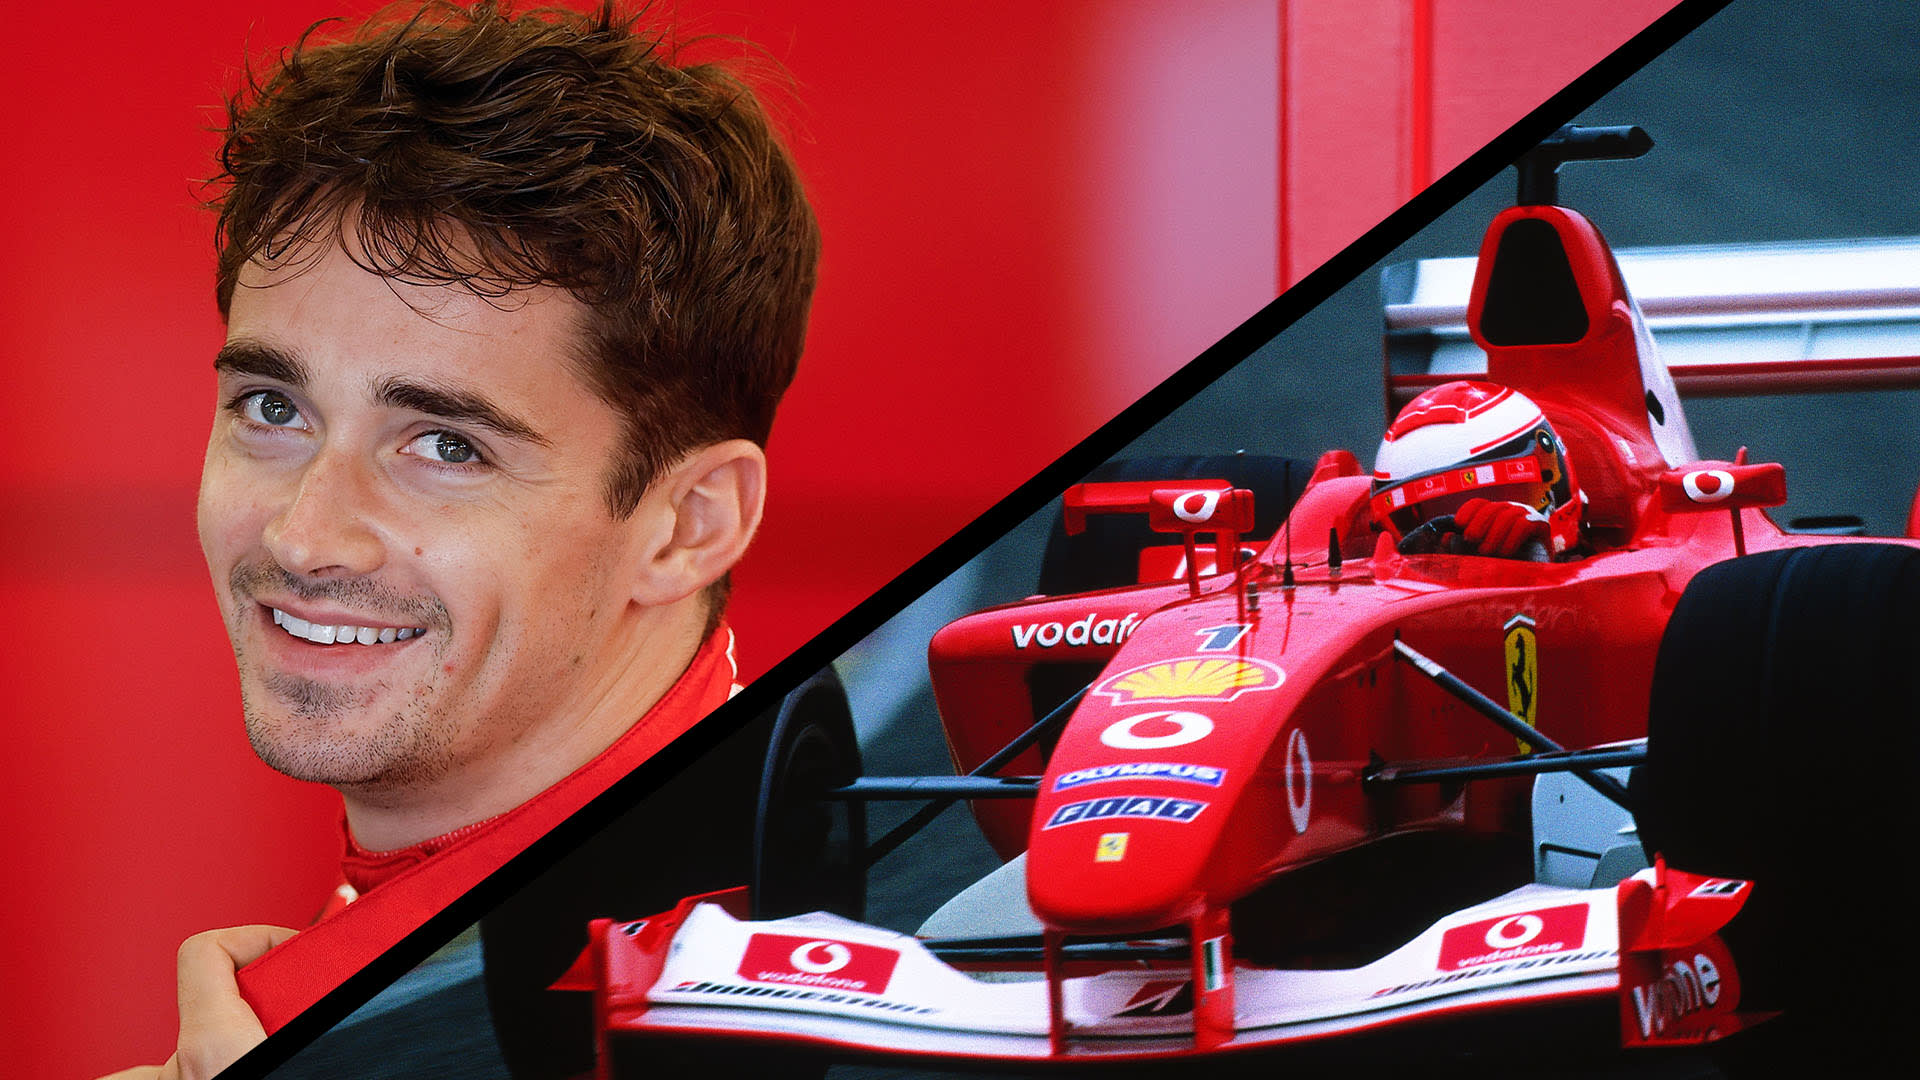 WATCH Go onboard with Leclerc as he drives a classic Schumacher Ferrari in Abu Dhabi Formula 1®